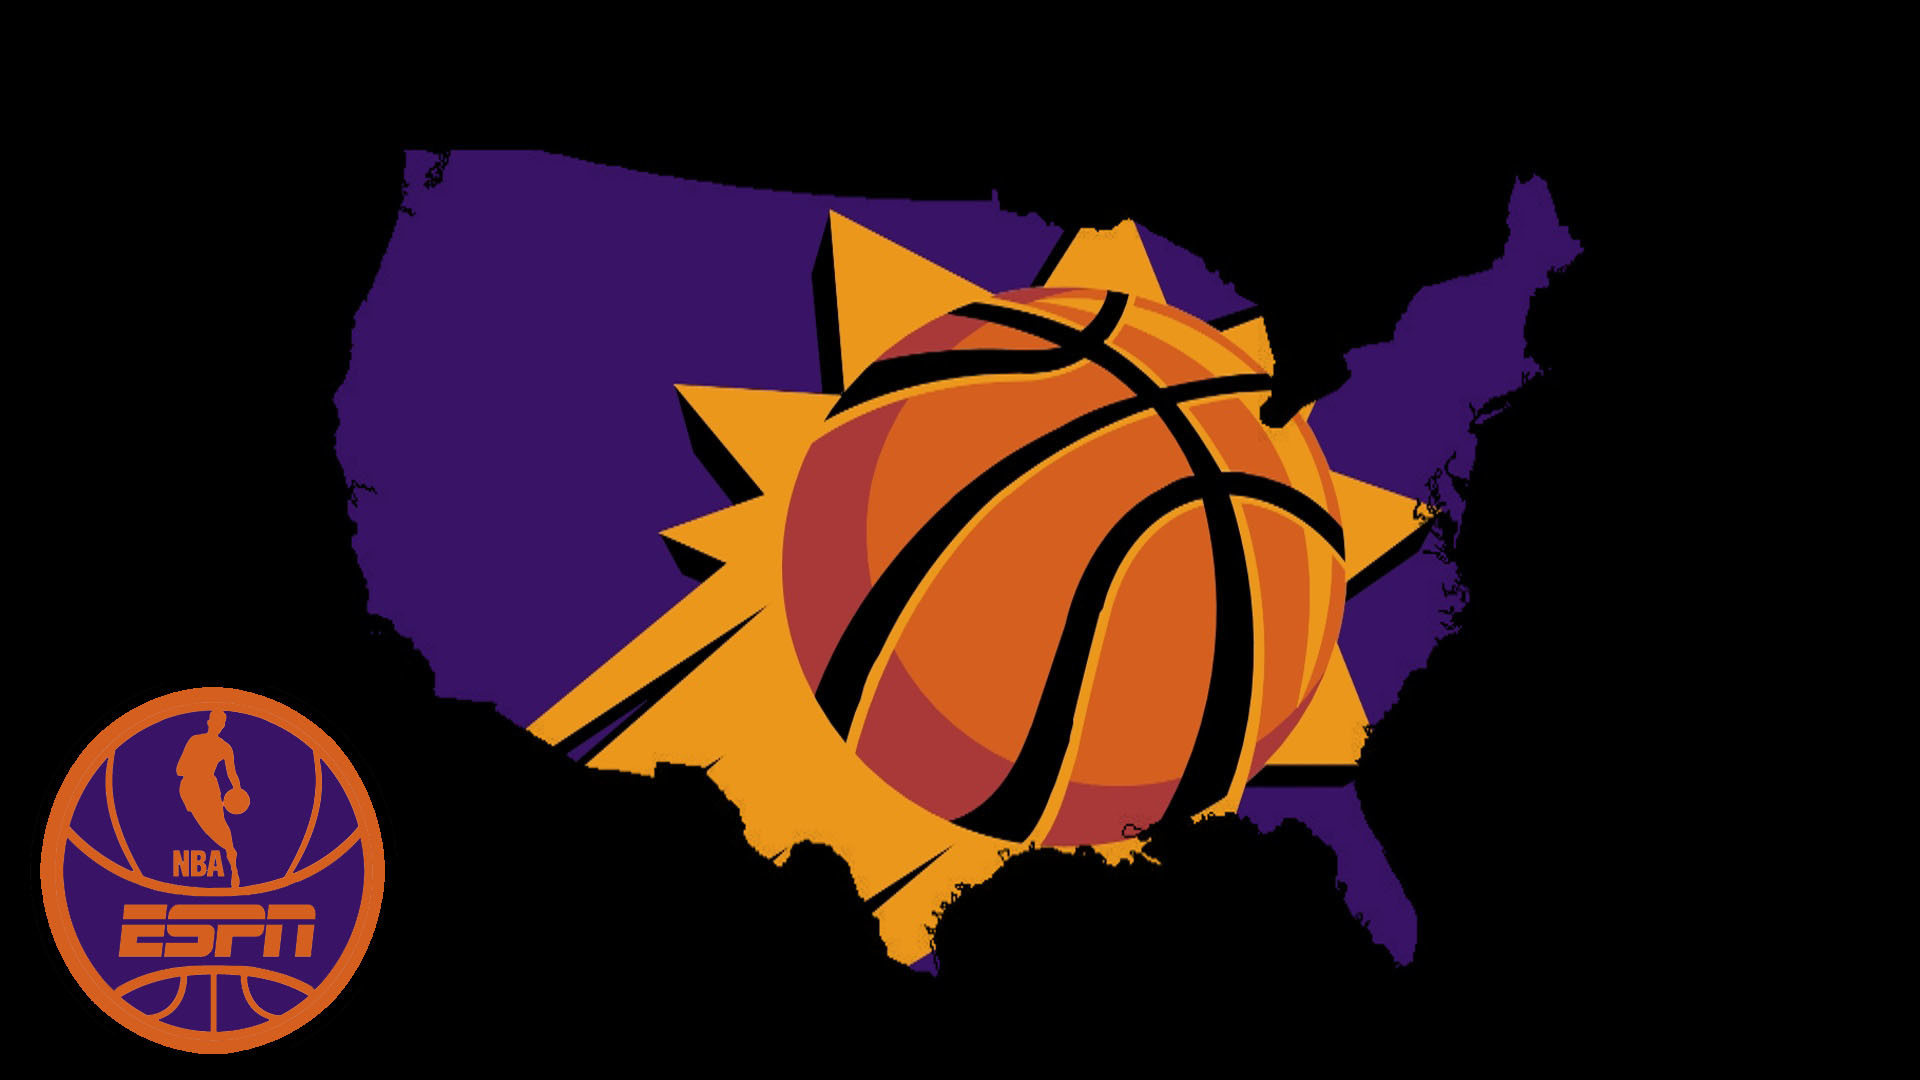 1920x1080 NBA USA Phoenix Suns HD Background by Devildog360 - Image #4306 - Licence:  Free